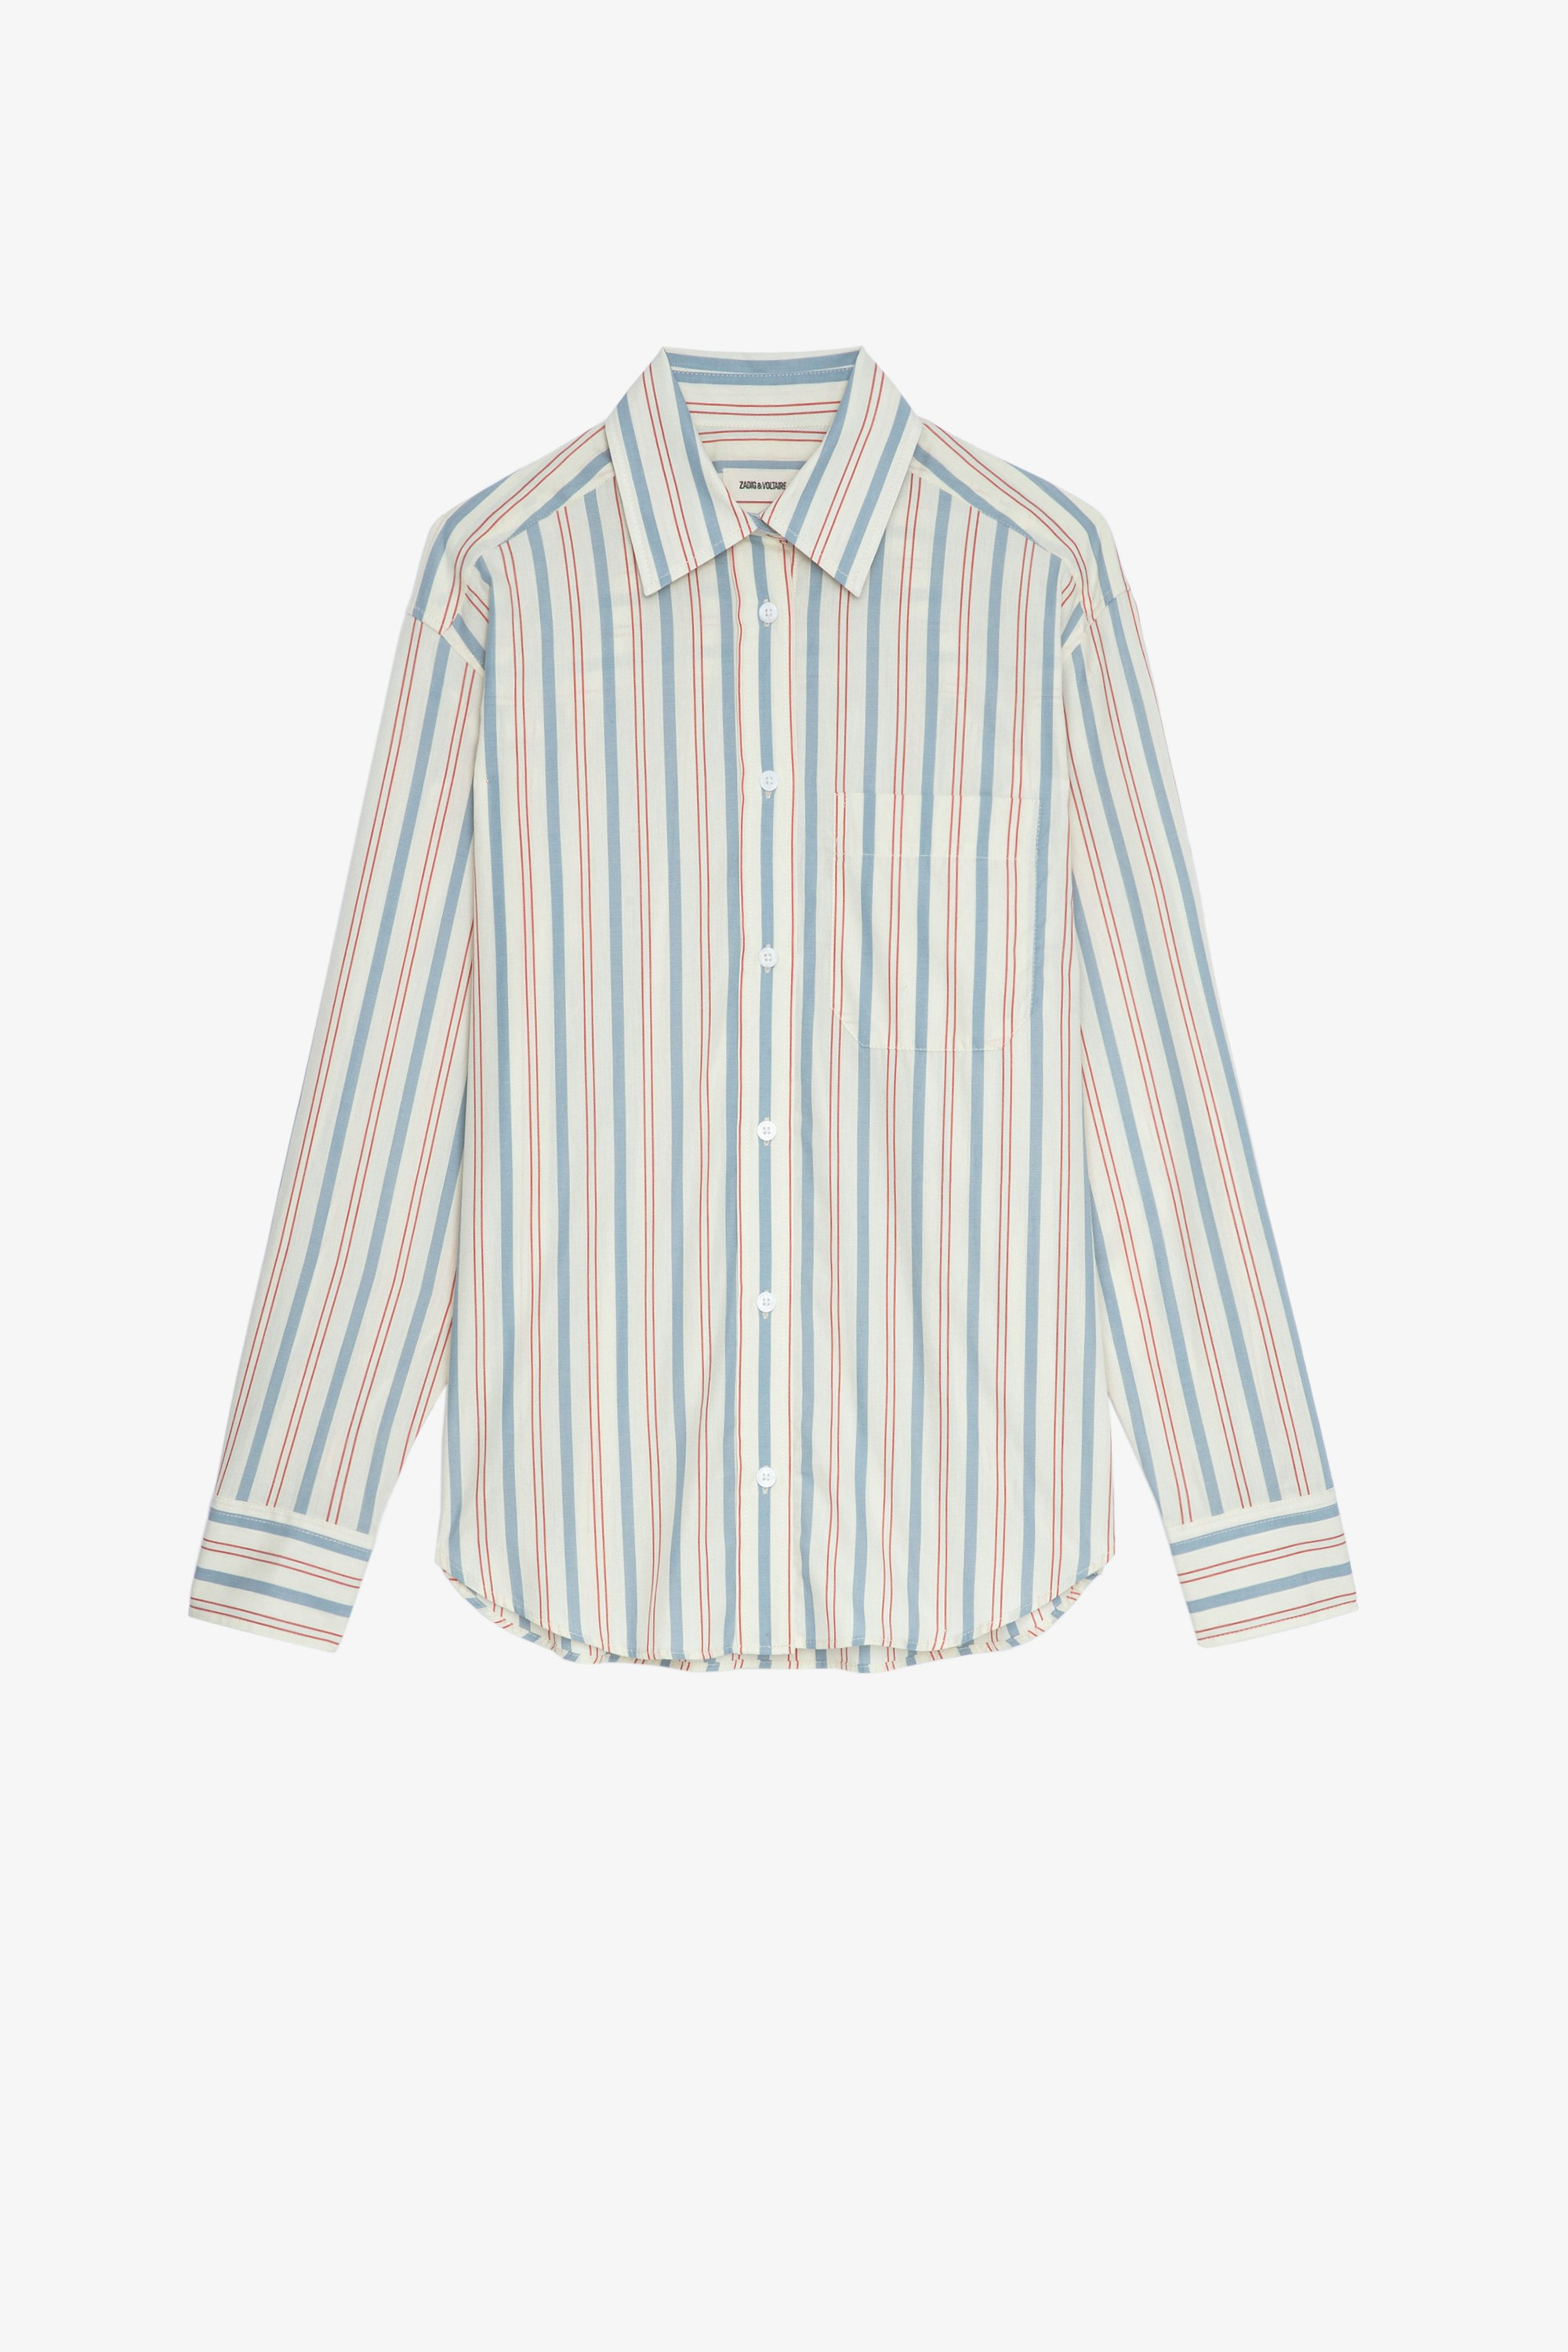 Tais Shirt Women’s ecru cotton striped long-sleeved shirt with crystal-embellished “Enjoy Today” slogan